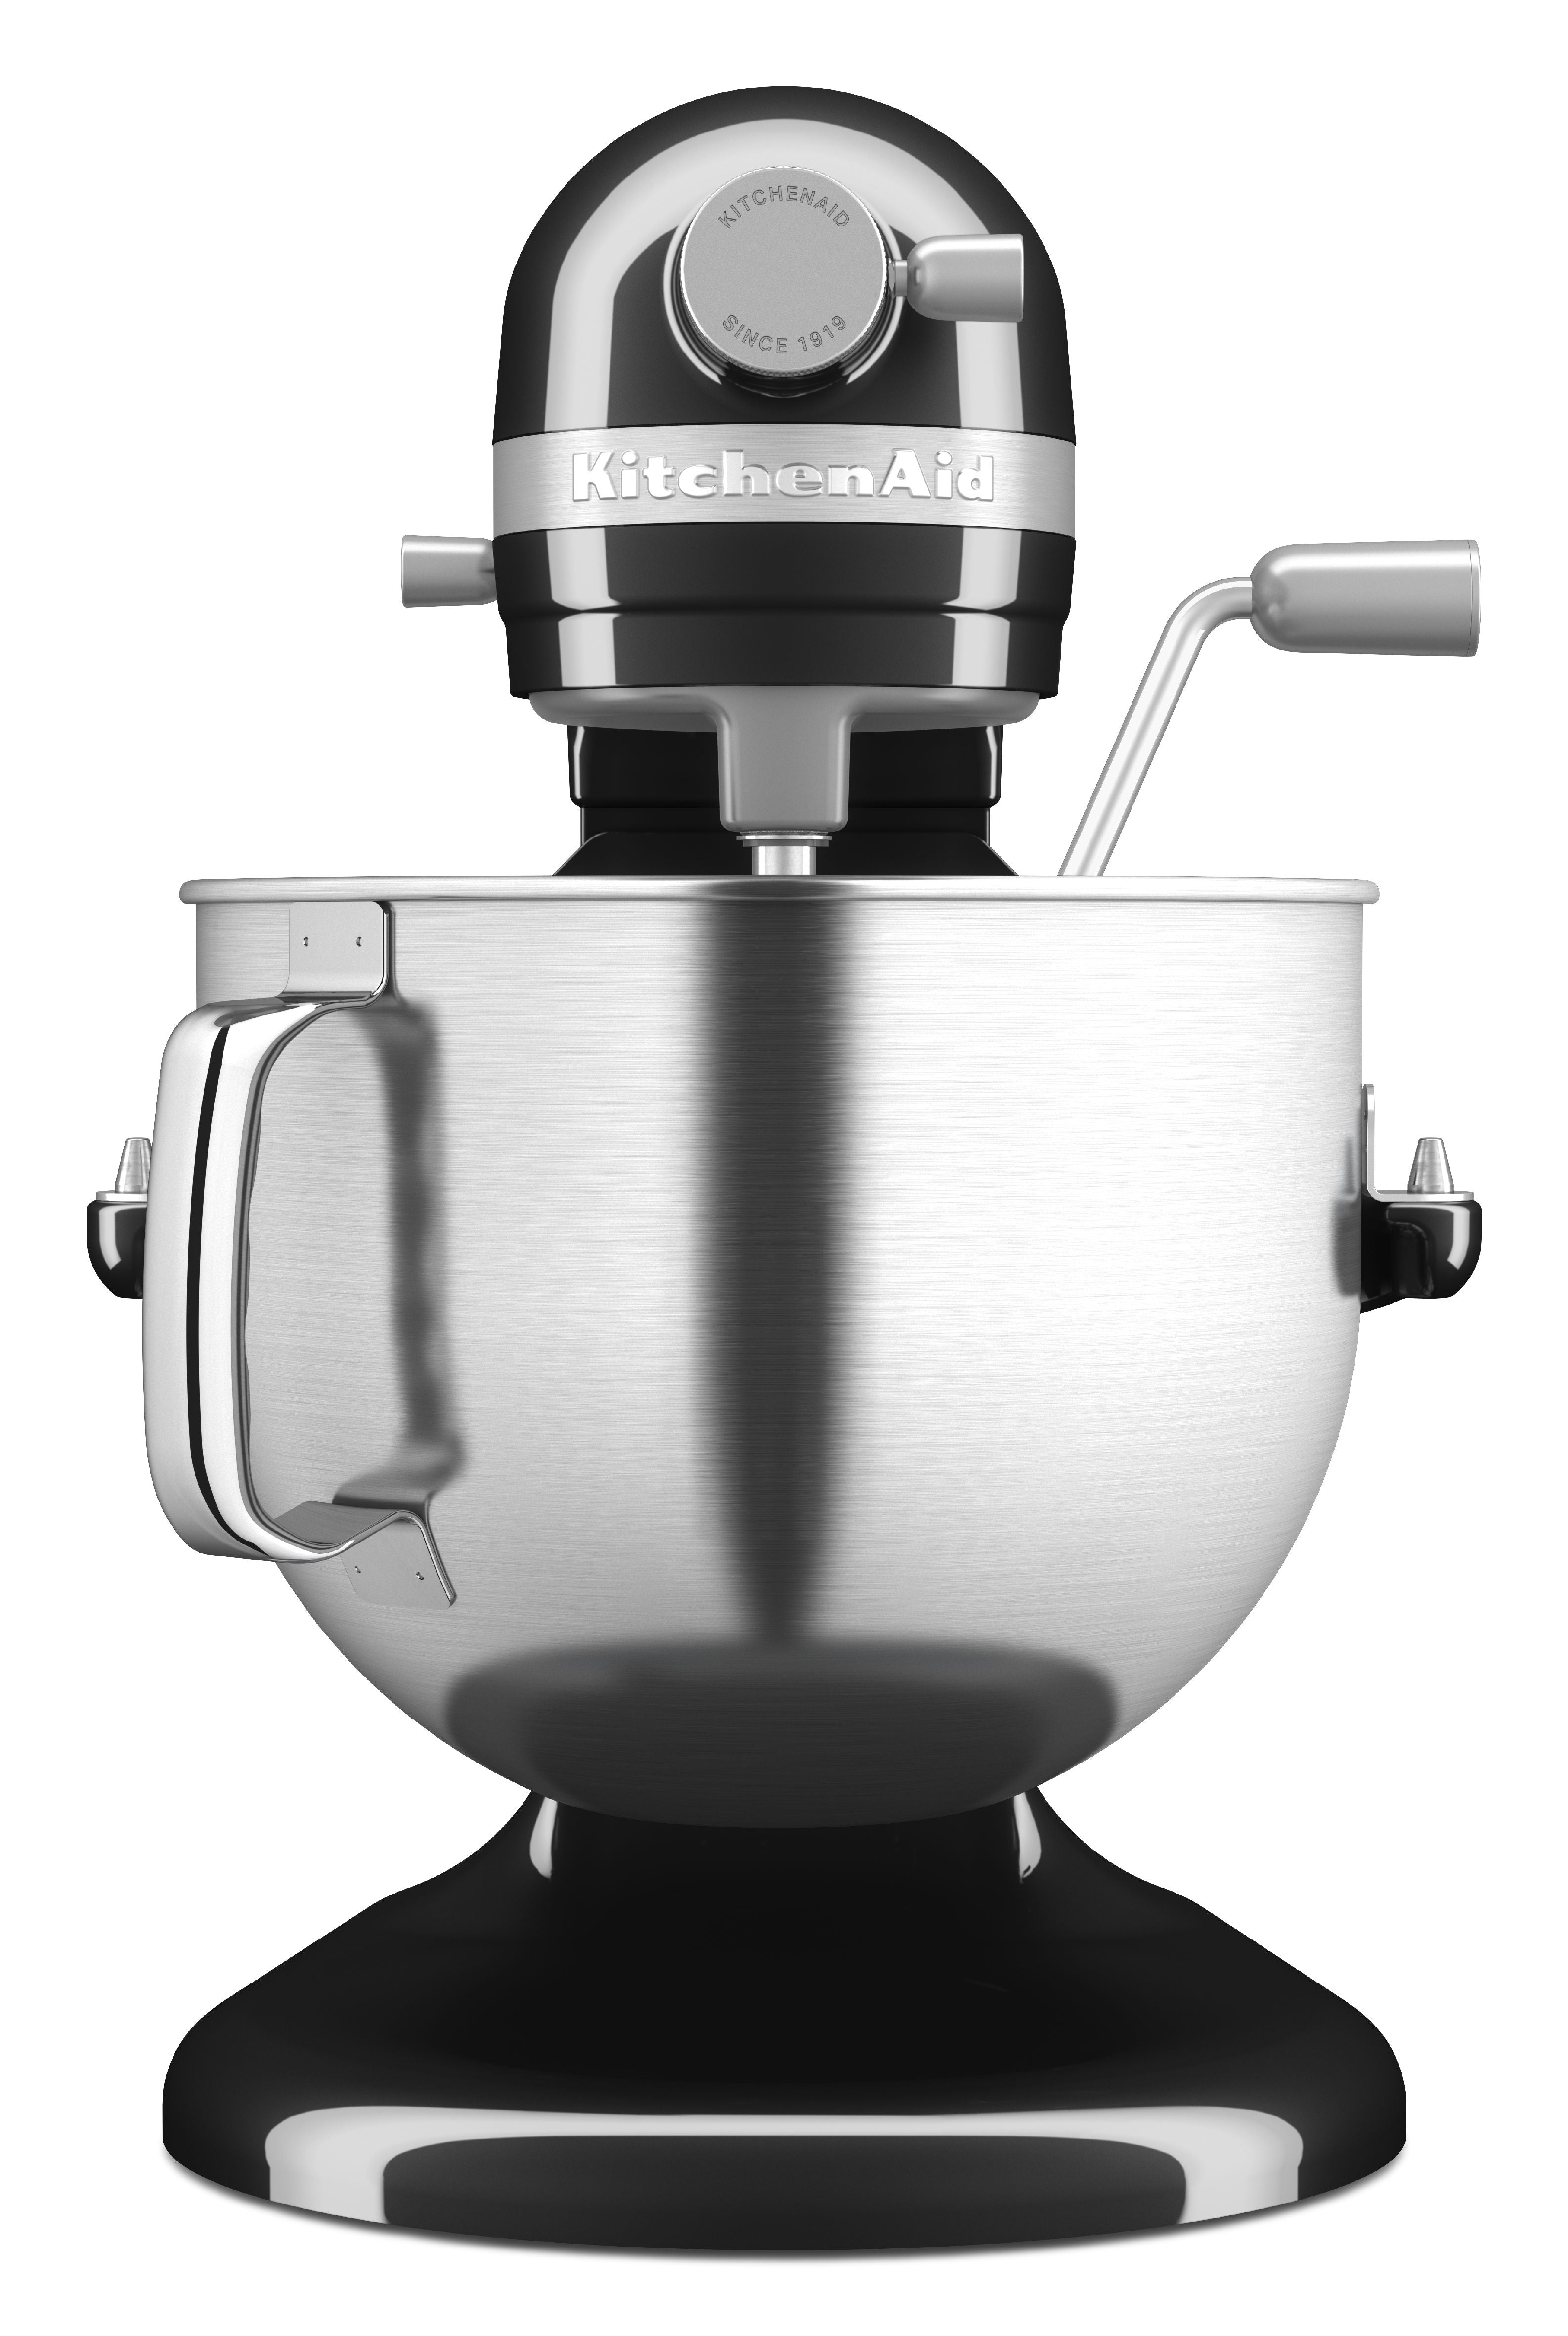 Køkkenhjælp Artisan Bowl Lift Stand Mixer 6.6 L, Onyx Black